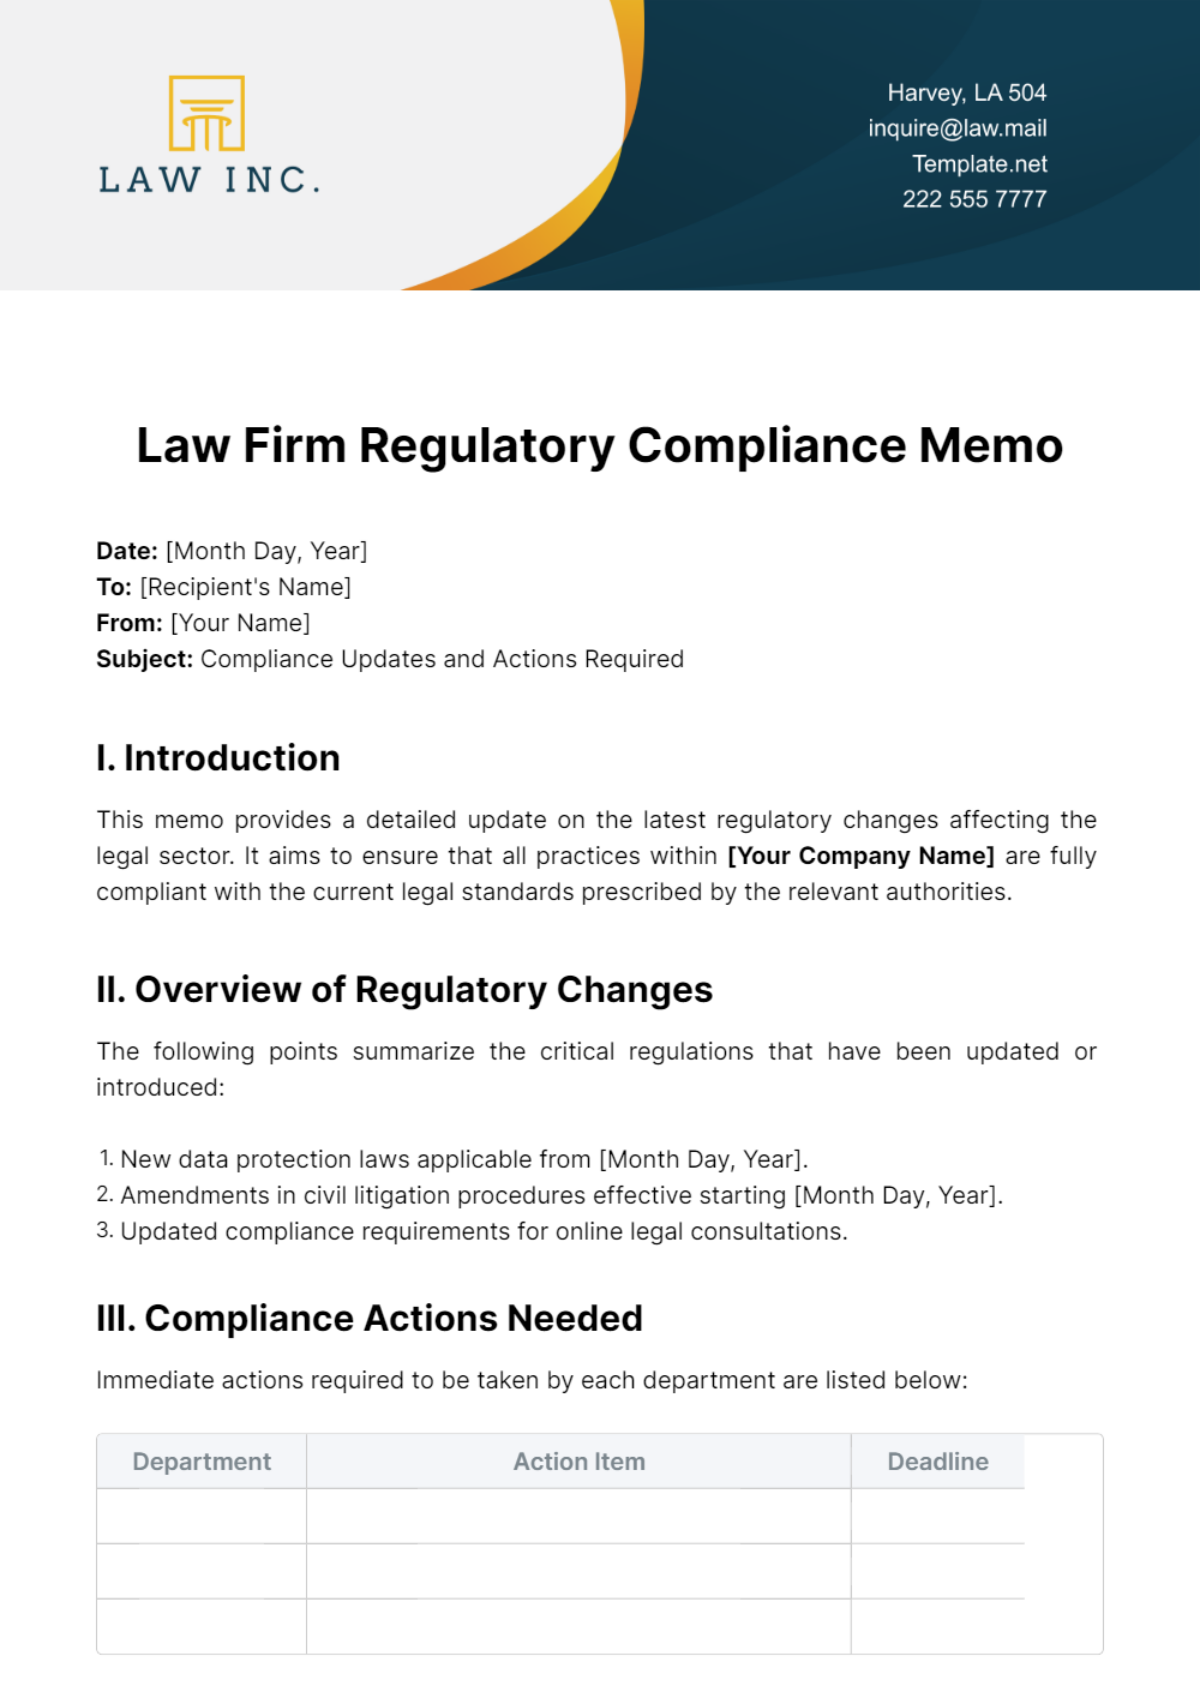 Free Law Firm Regulatory Compliance Memo Template